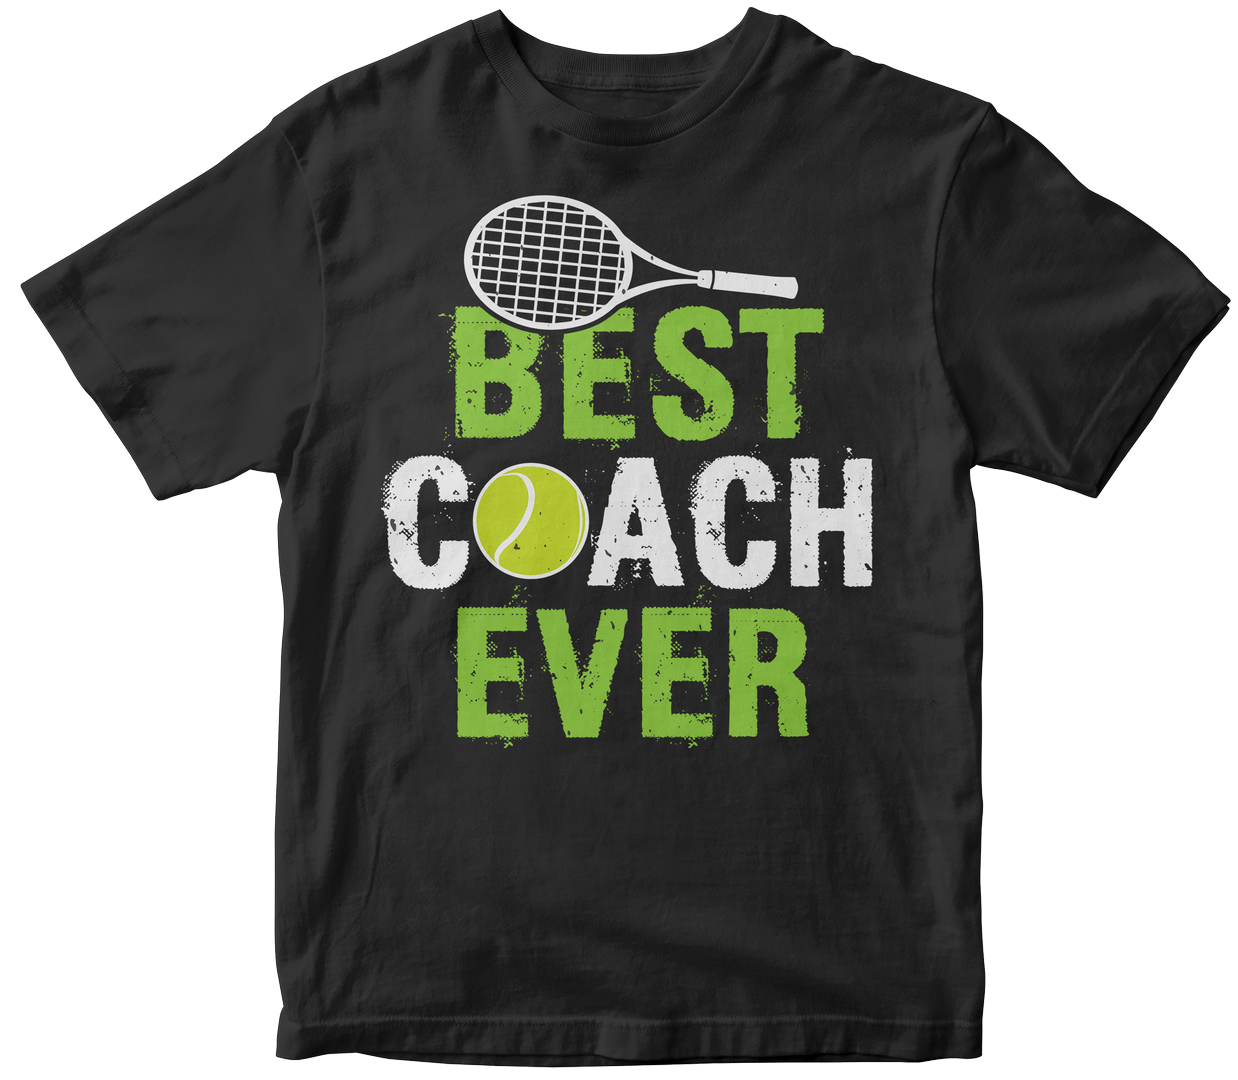 50-customizable-training-tennis-tshirt-design-bundle